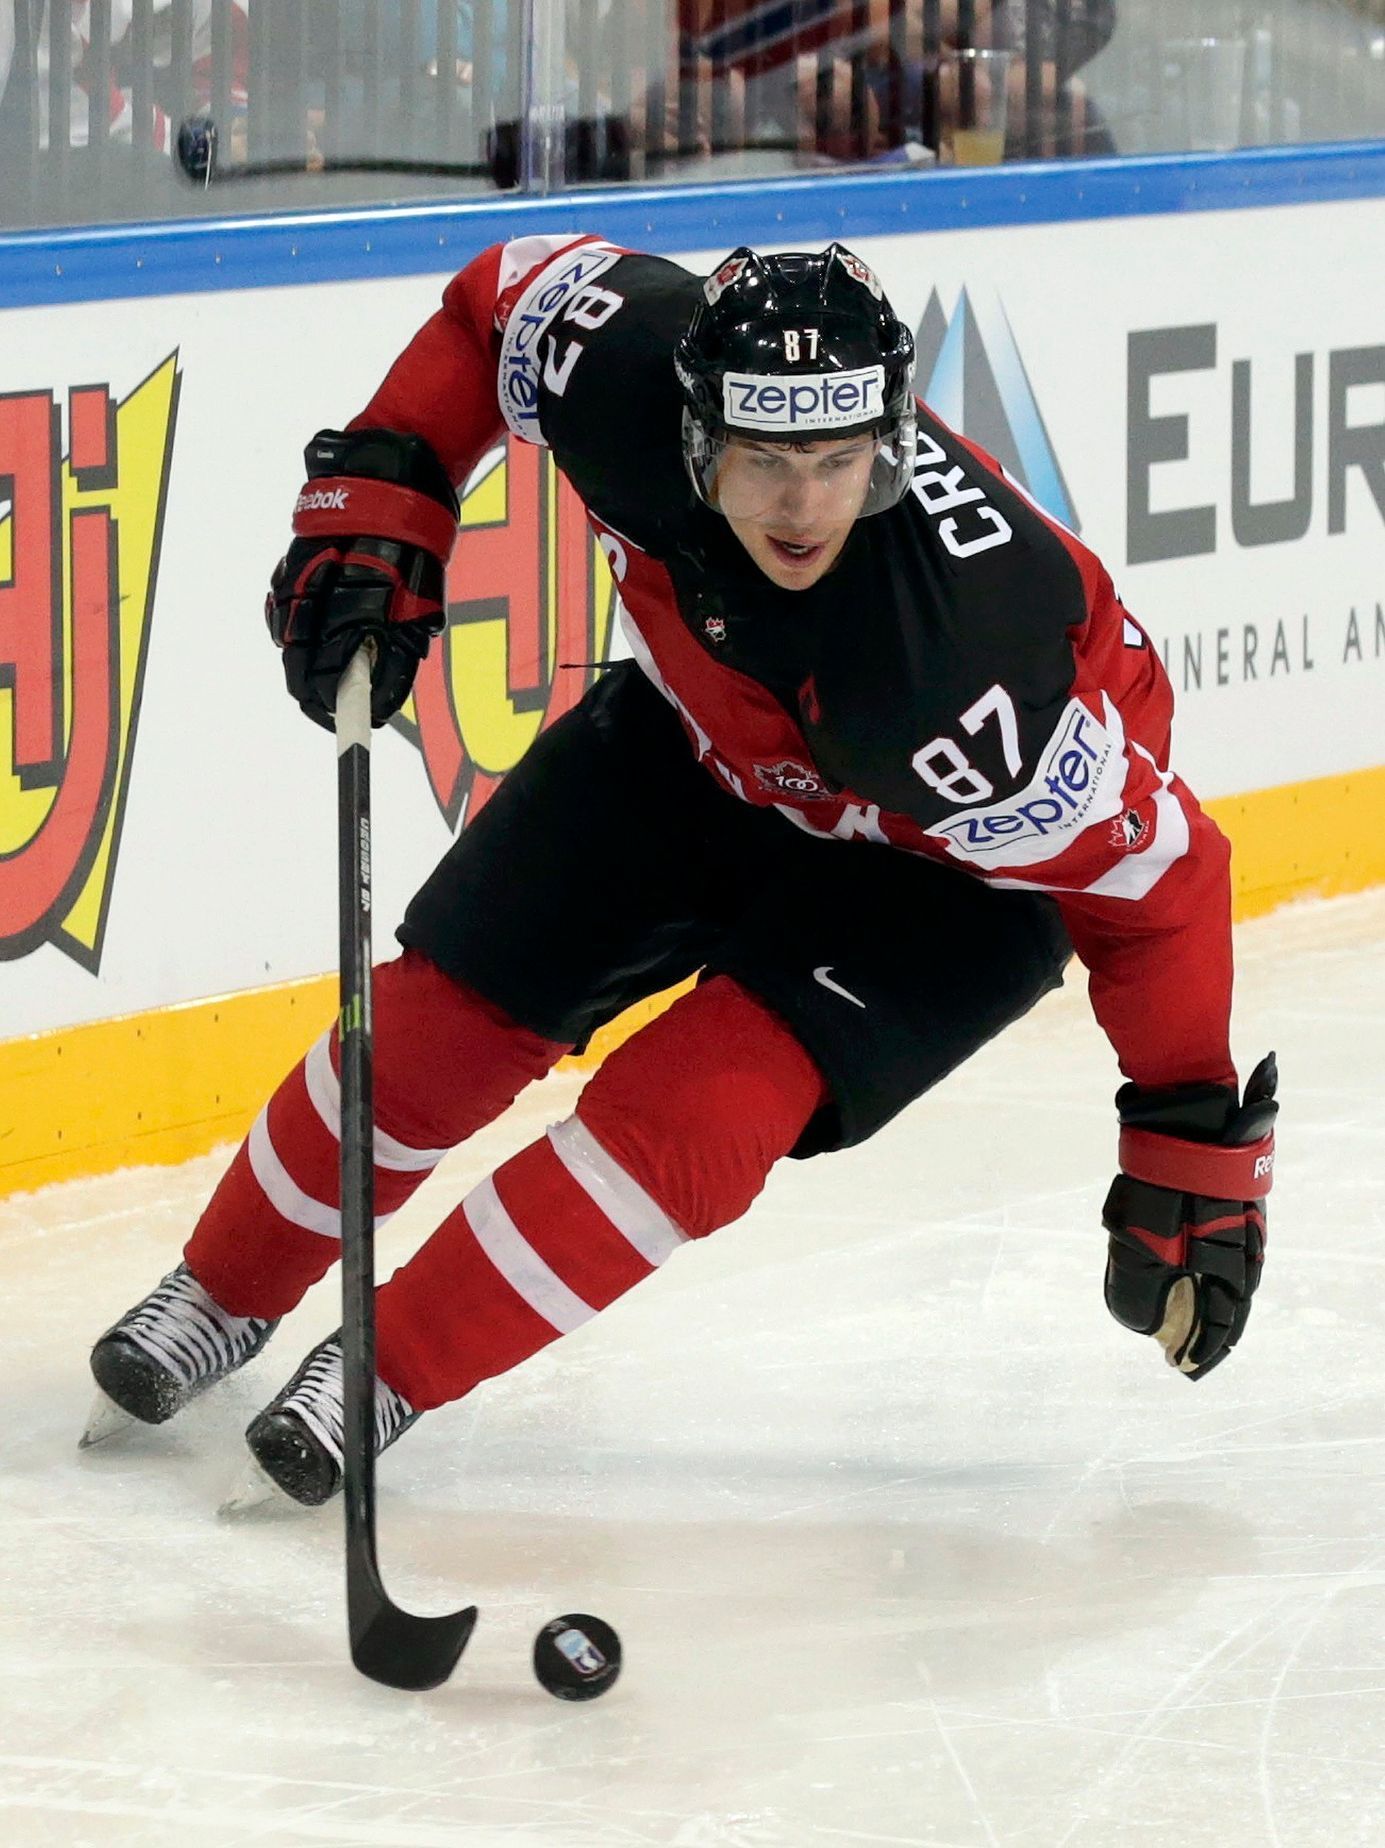 MS 2015, SF Česko-Kanada: Sidney Crosby